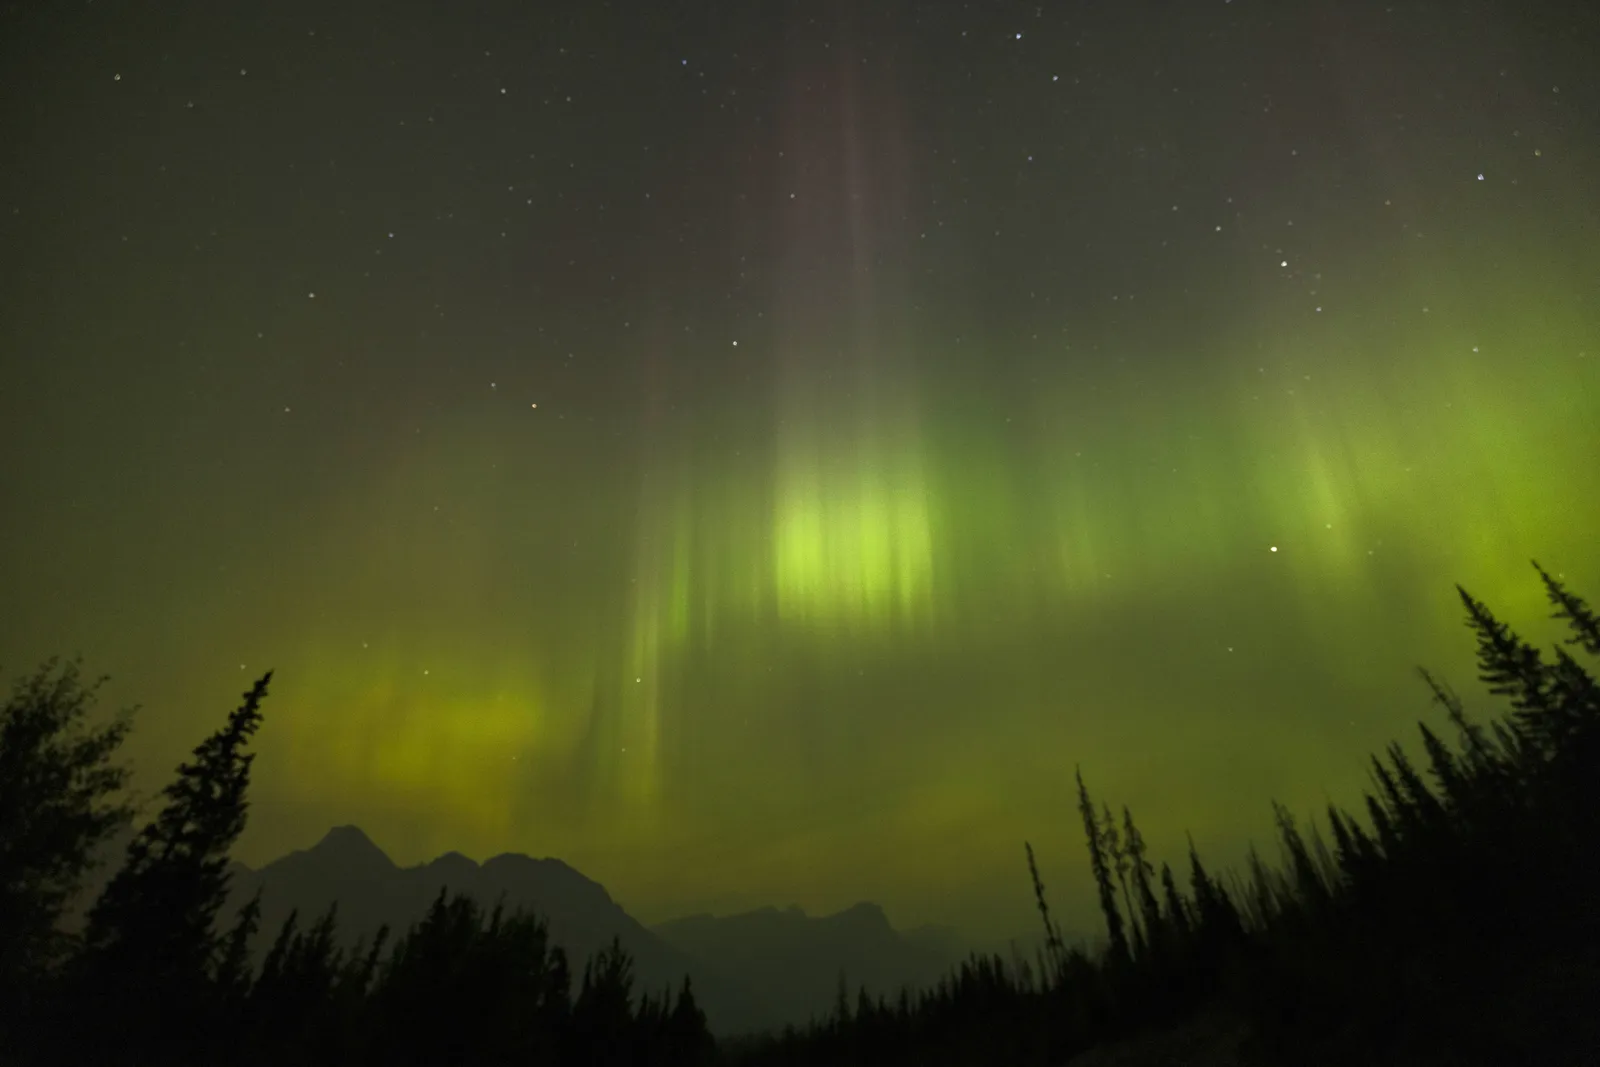 Illustration Northern lights - aurora borealis